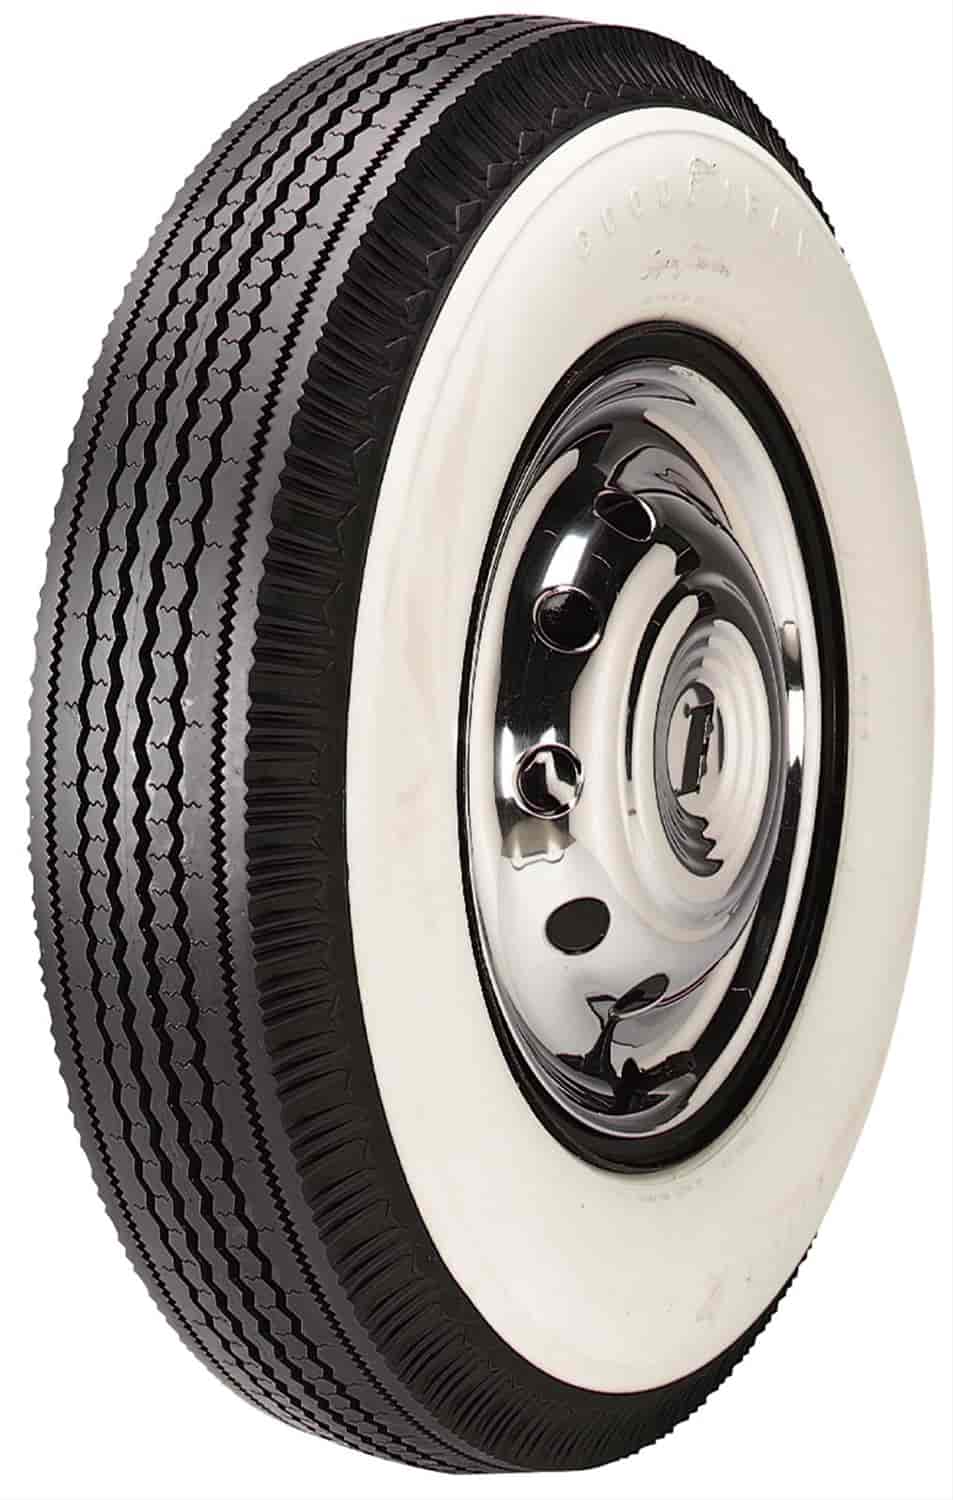 Goodyear Collector Series Super Cushion Tire